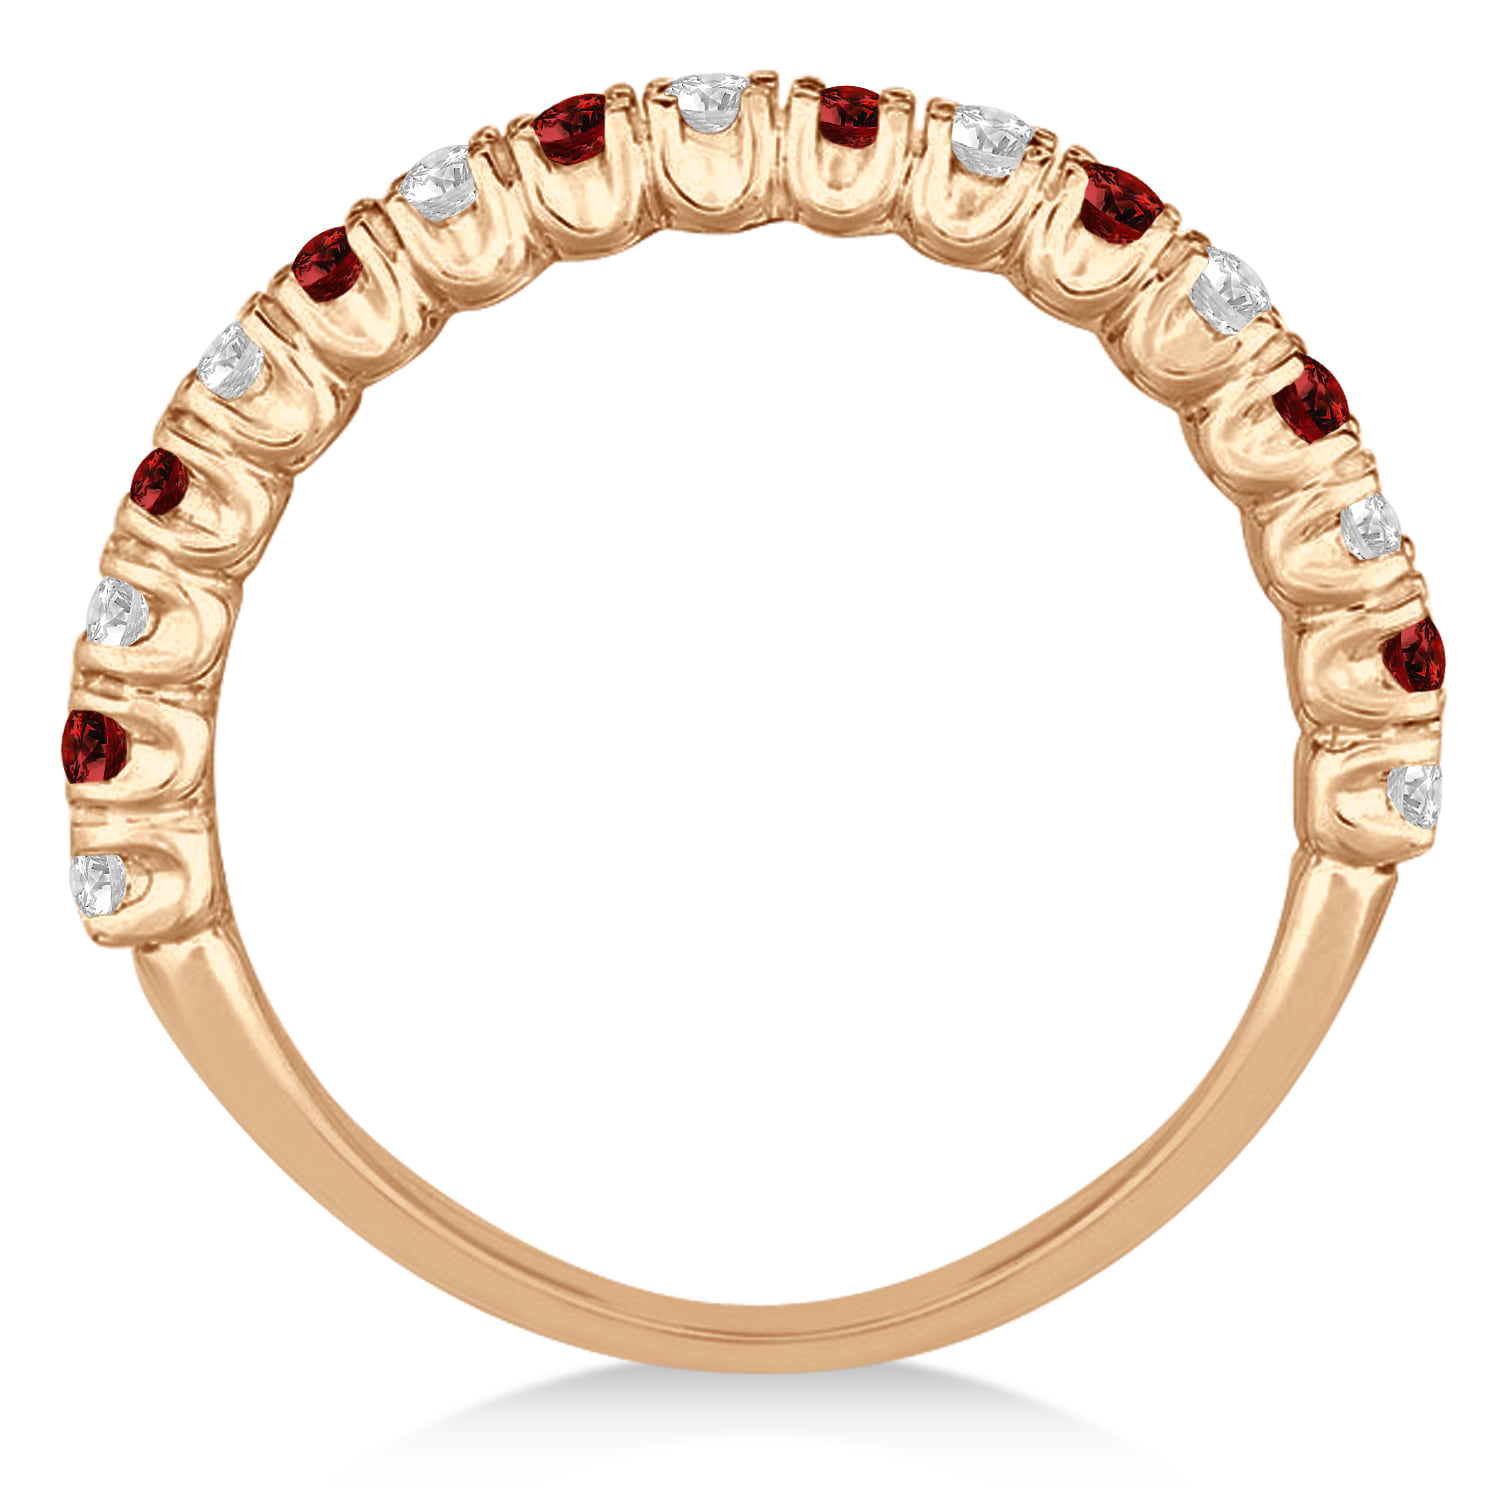 Garnet & Diamond Wedding Band Anniversary Ring in 14k Rose Gold (0.75ct)